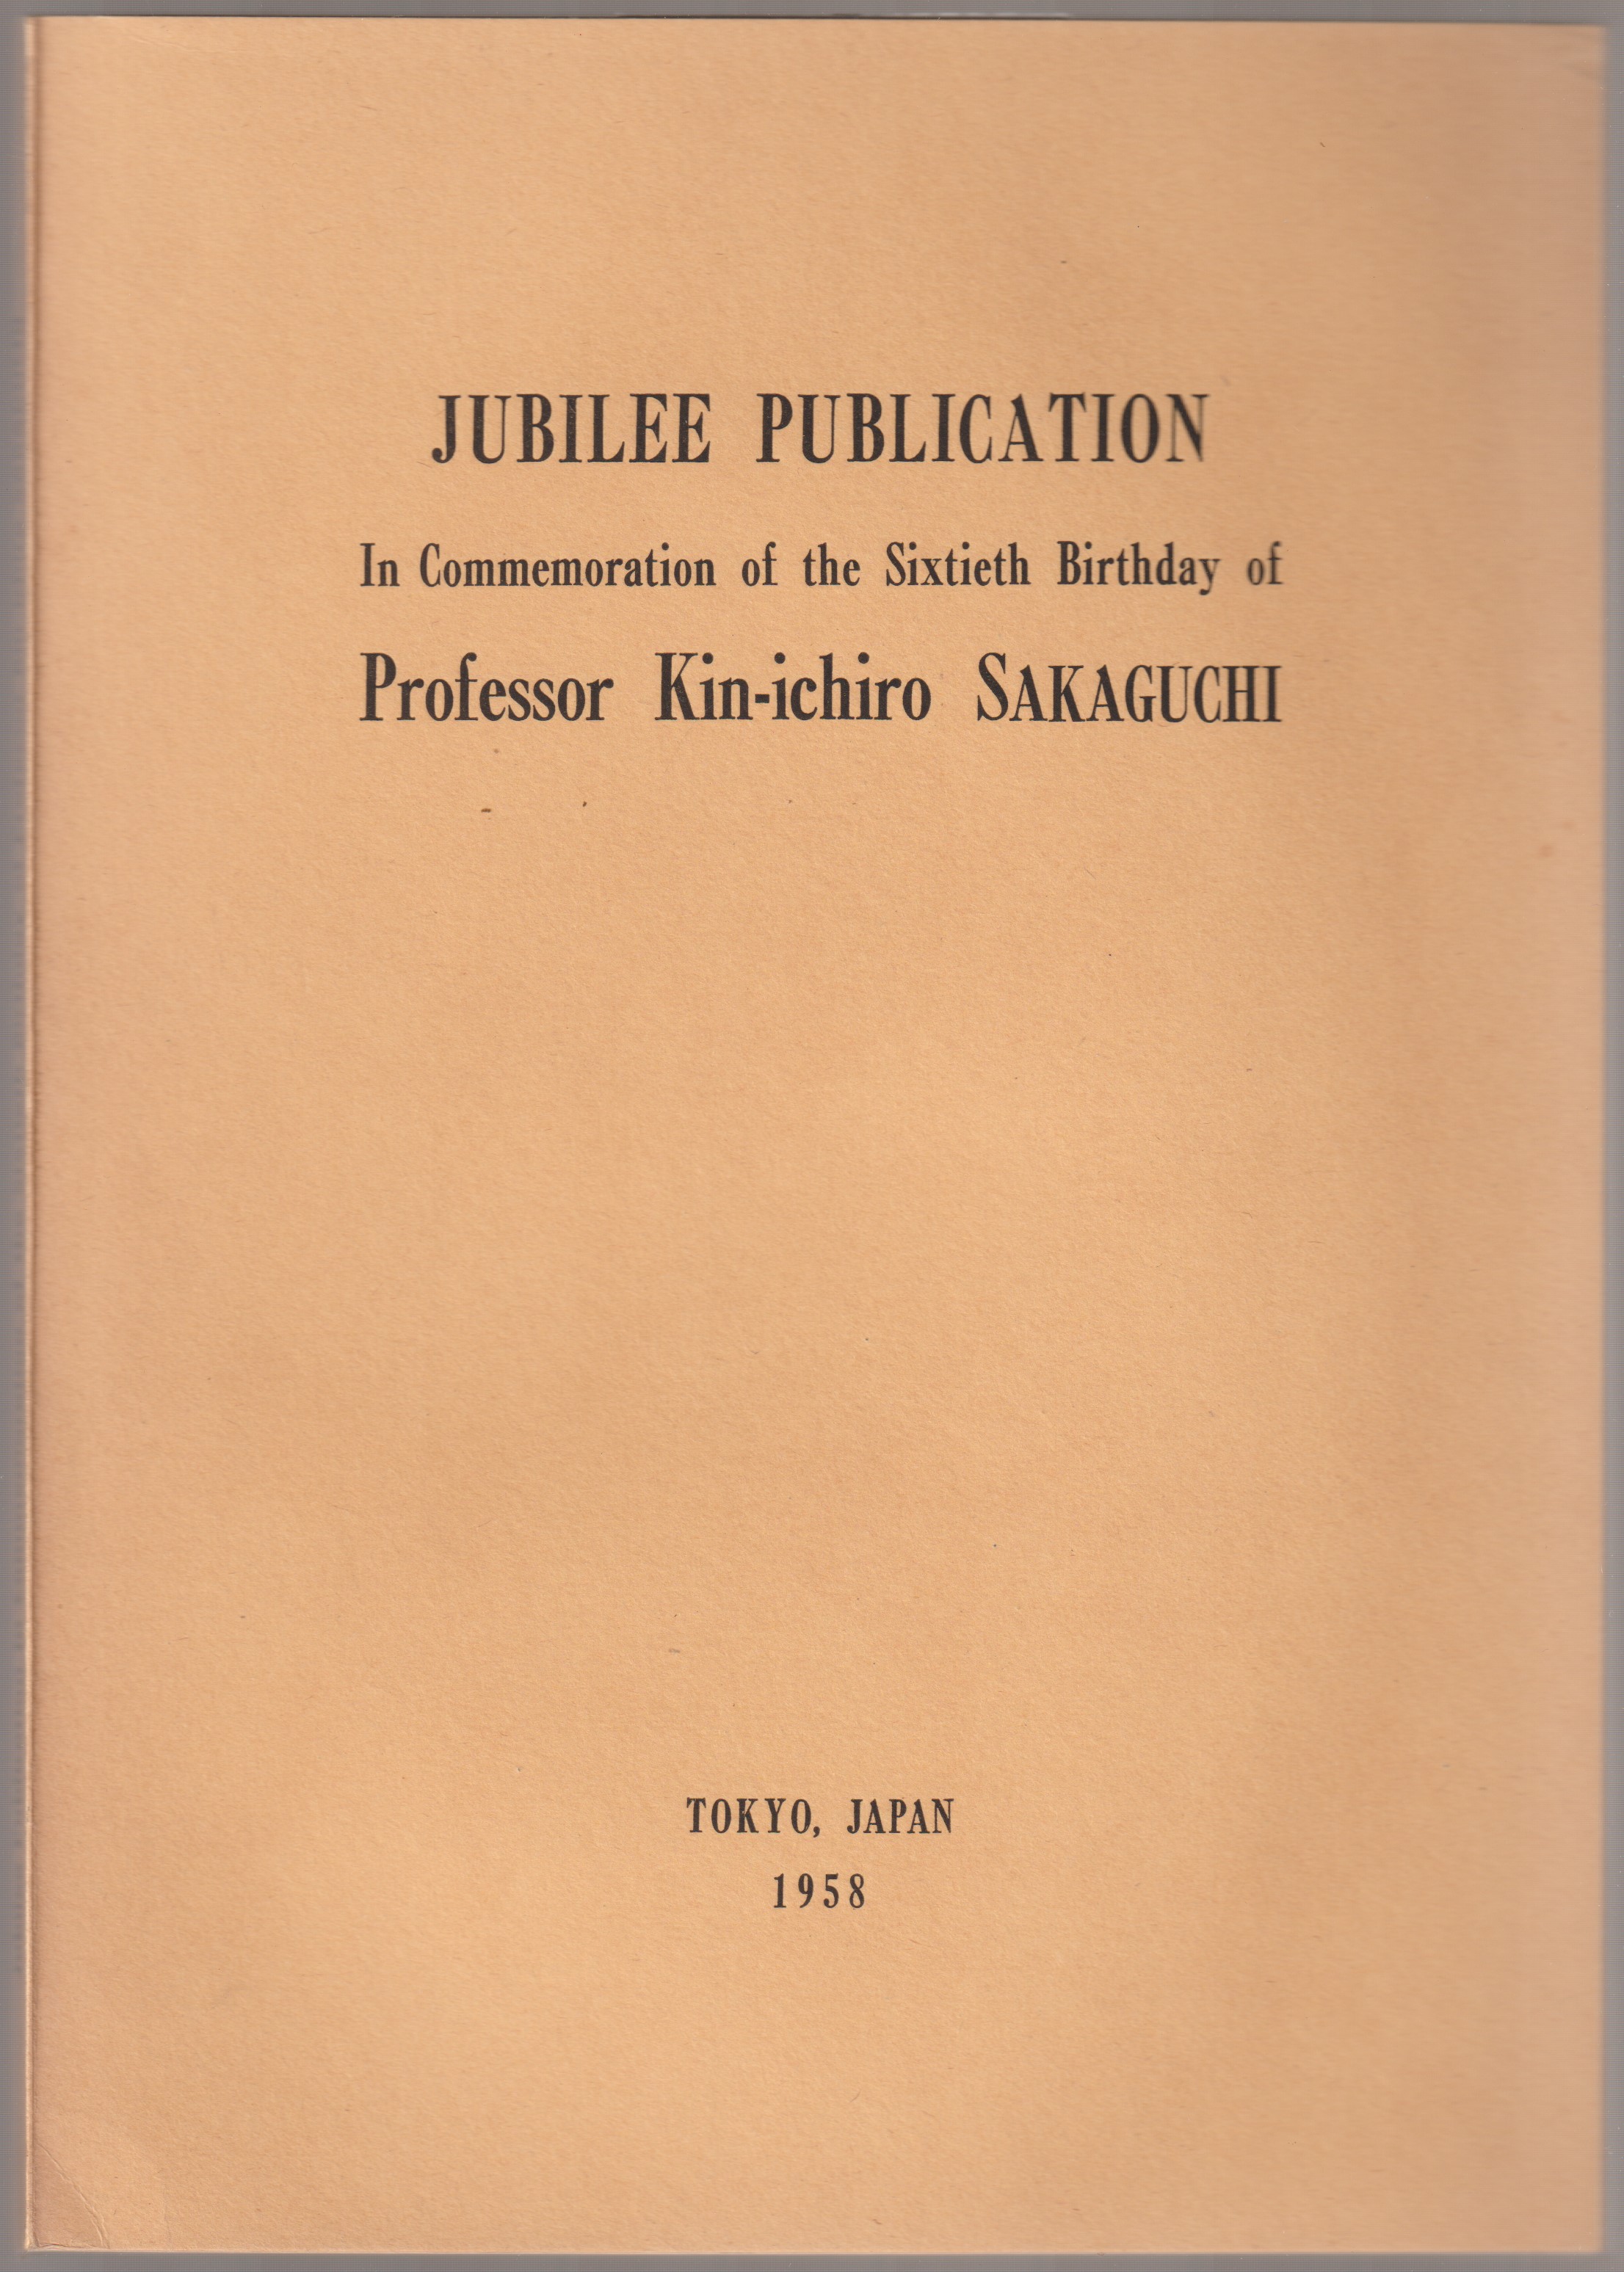 Jubilee publication in commemoration of the sixtieth birthday of Professor Kin-ichiro Sakaguchi